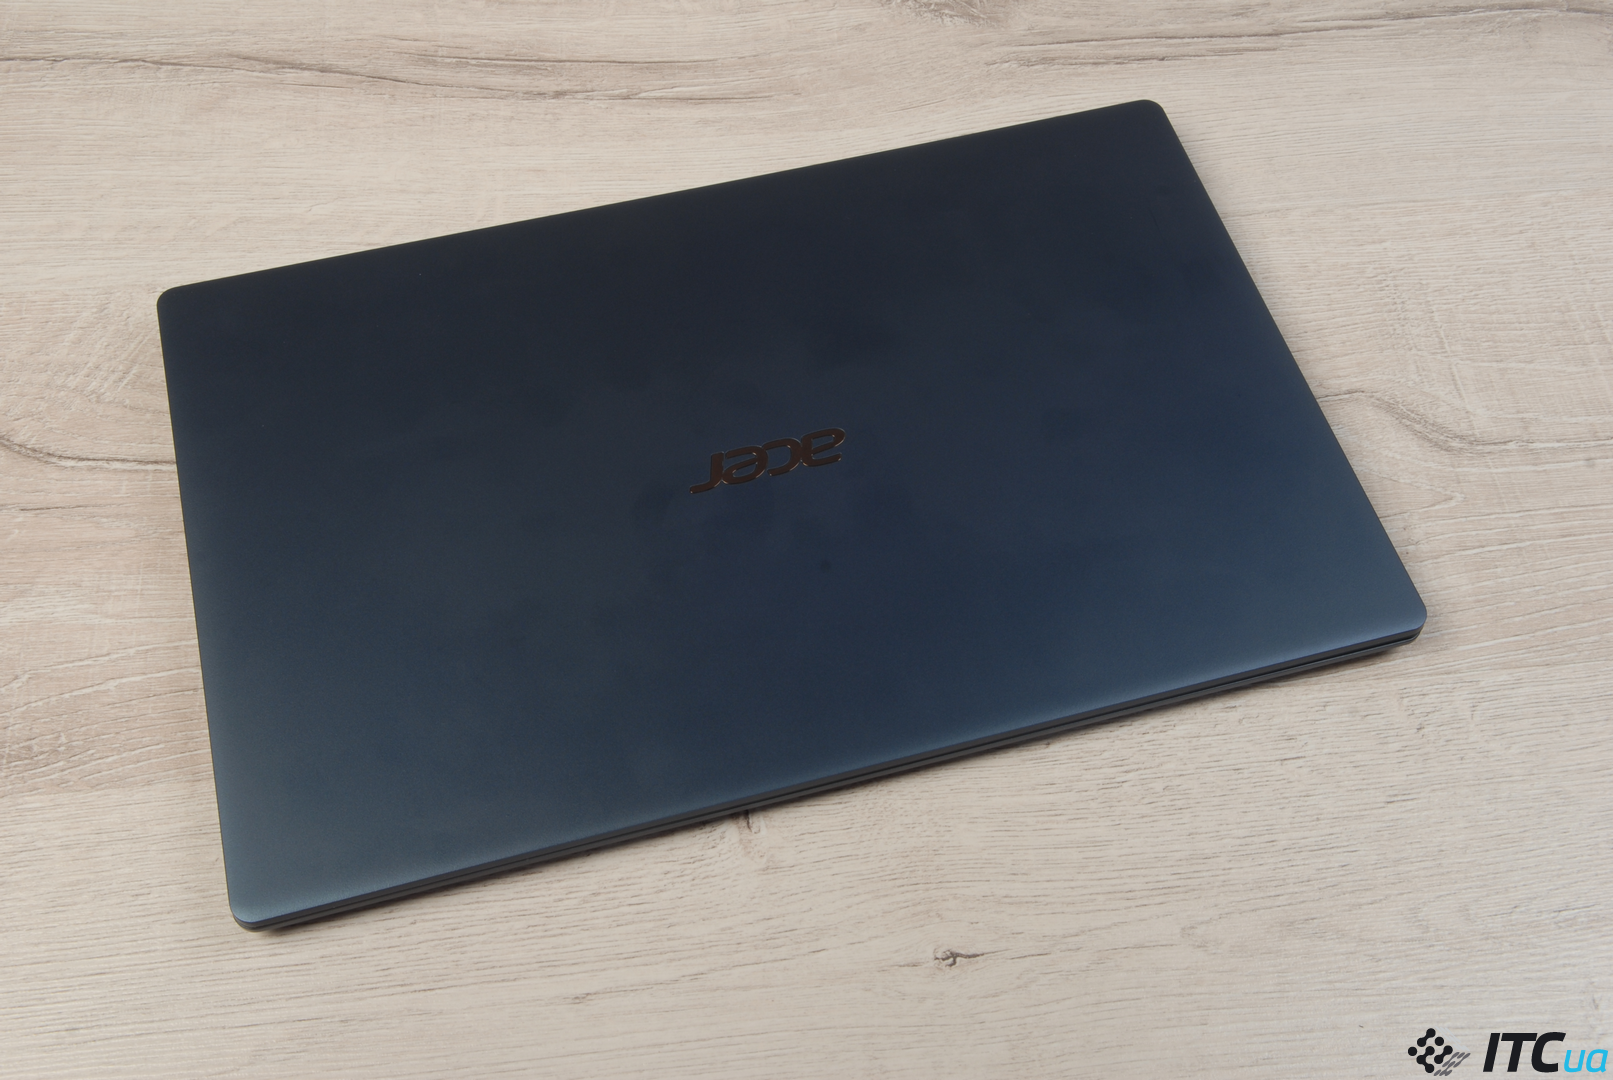 Обзор ультралегкого ноутбука Acer Swift 5 (SF515-51T)